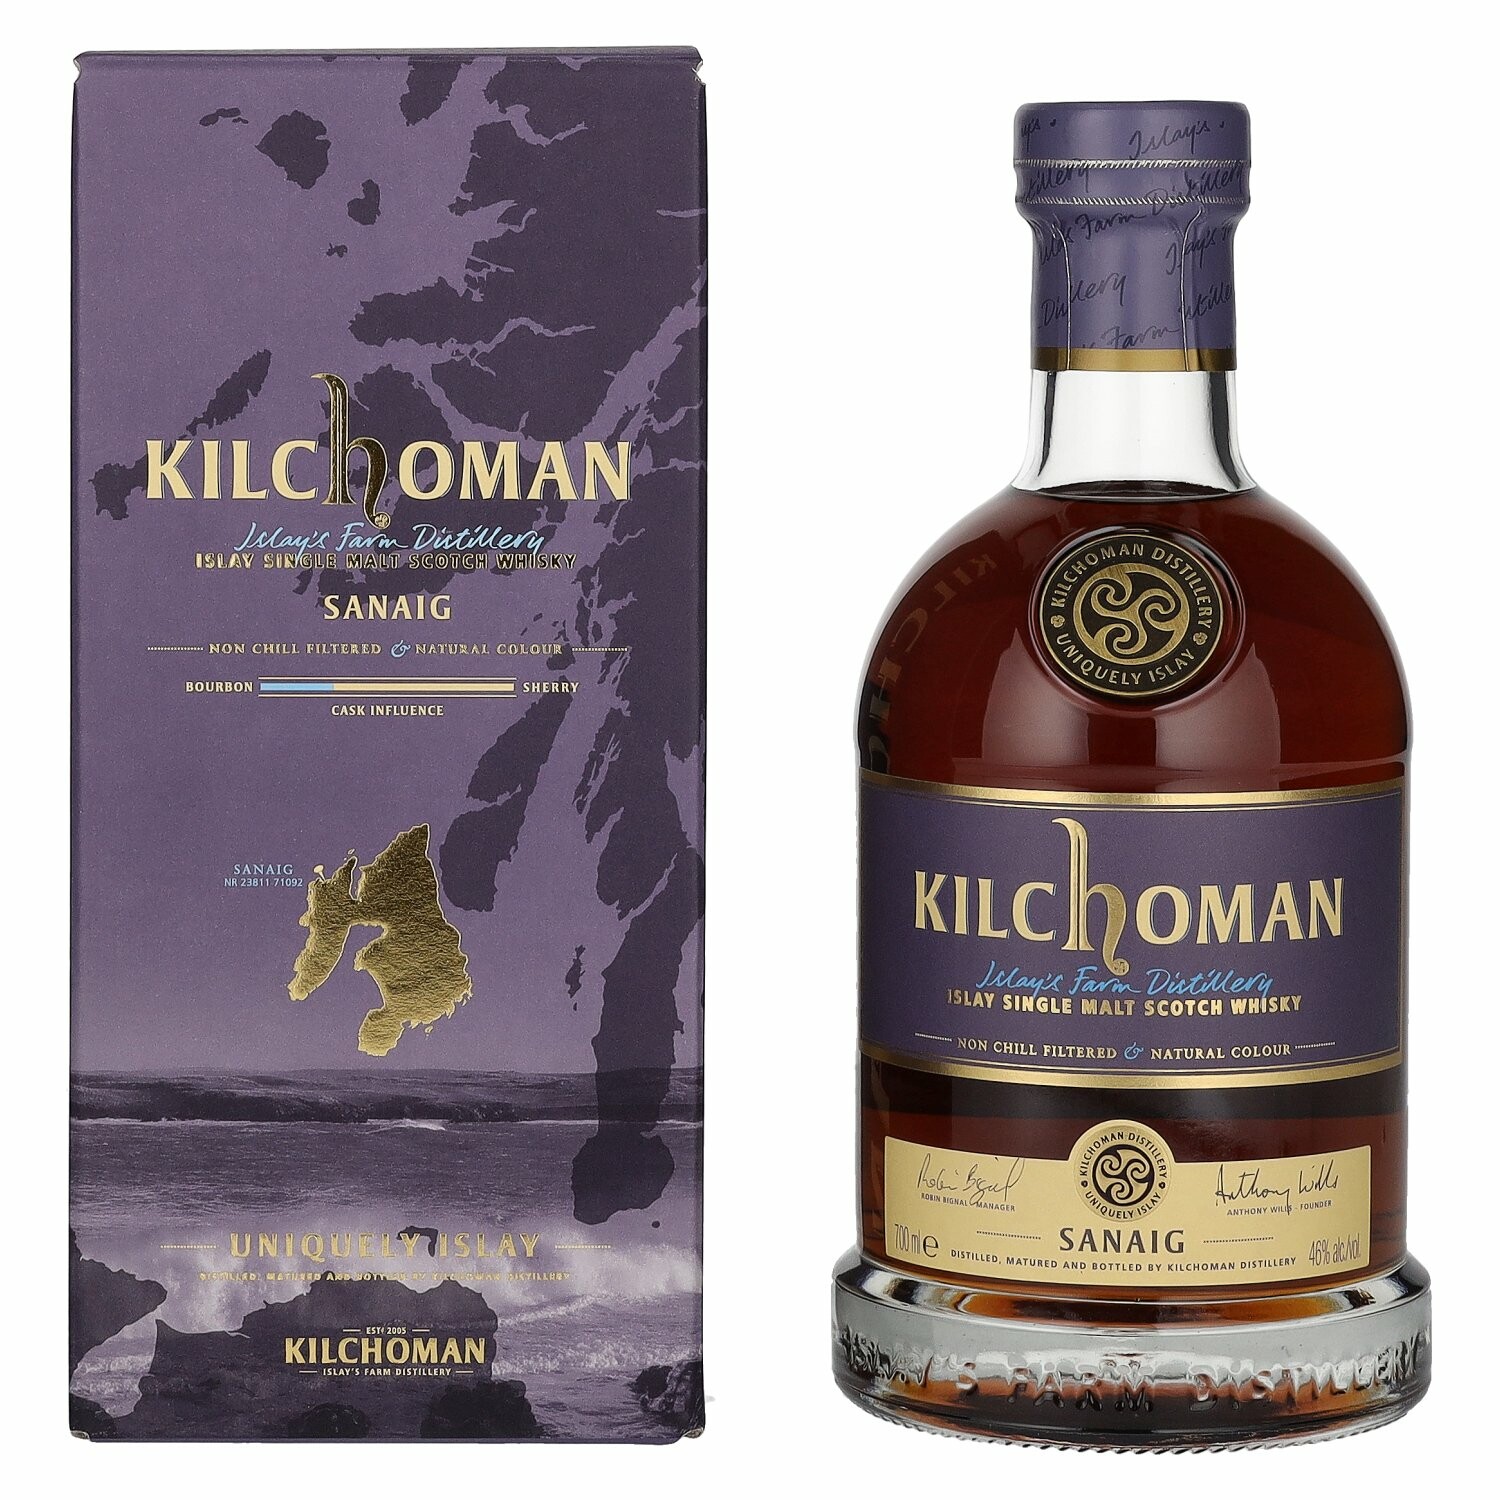 Kilchoman SANAIG Islay Single Malt Scotch Whisky 46% Vol. 0,7l in Giftbox